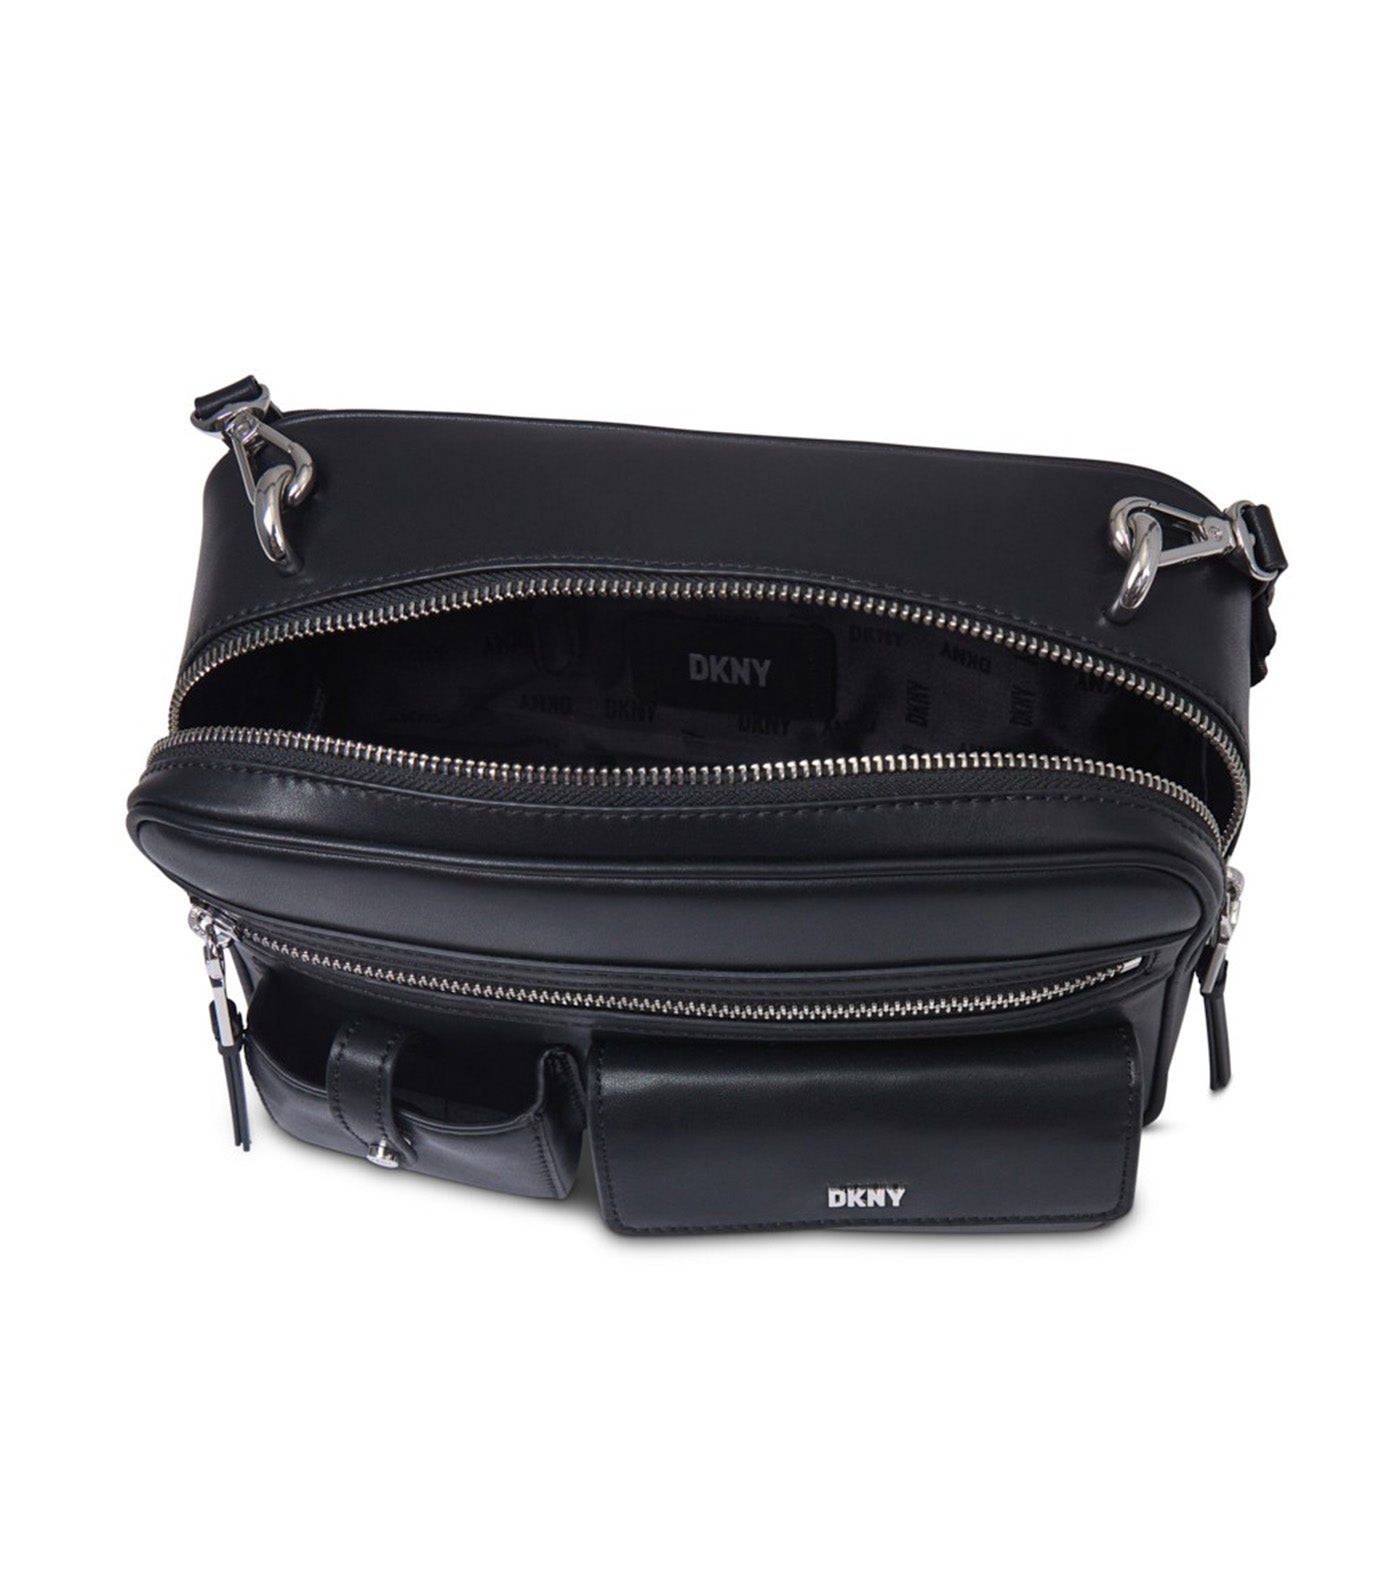 DKNY Abby Camera Bag in Black